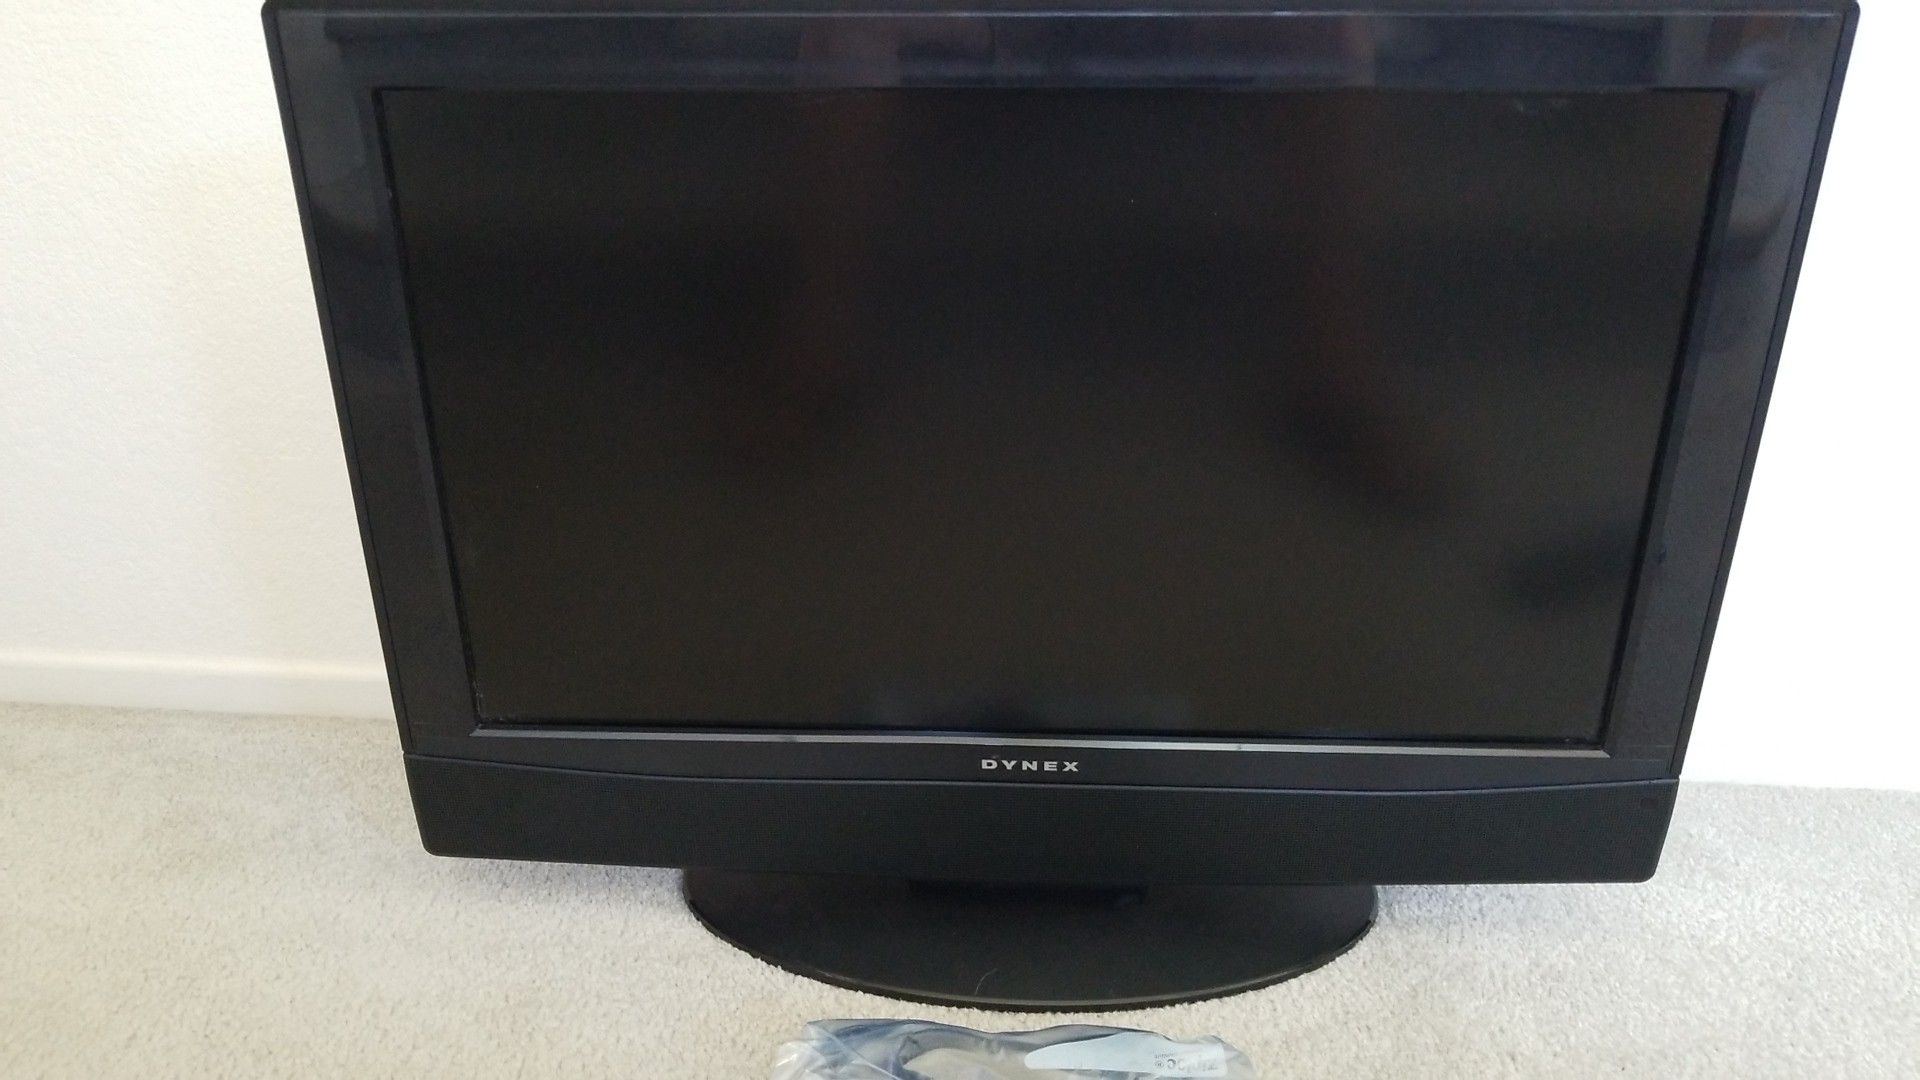 Dynex 32" LCD TV